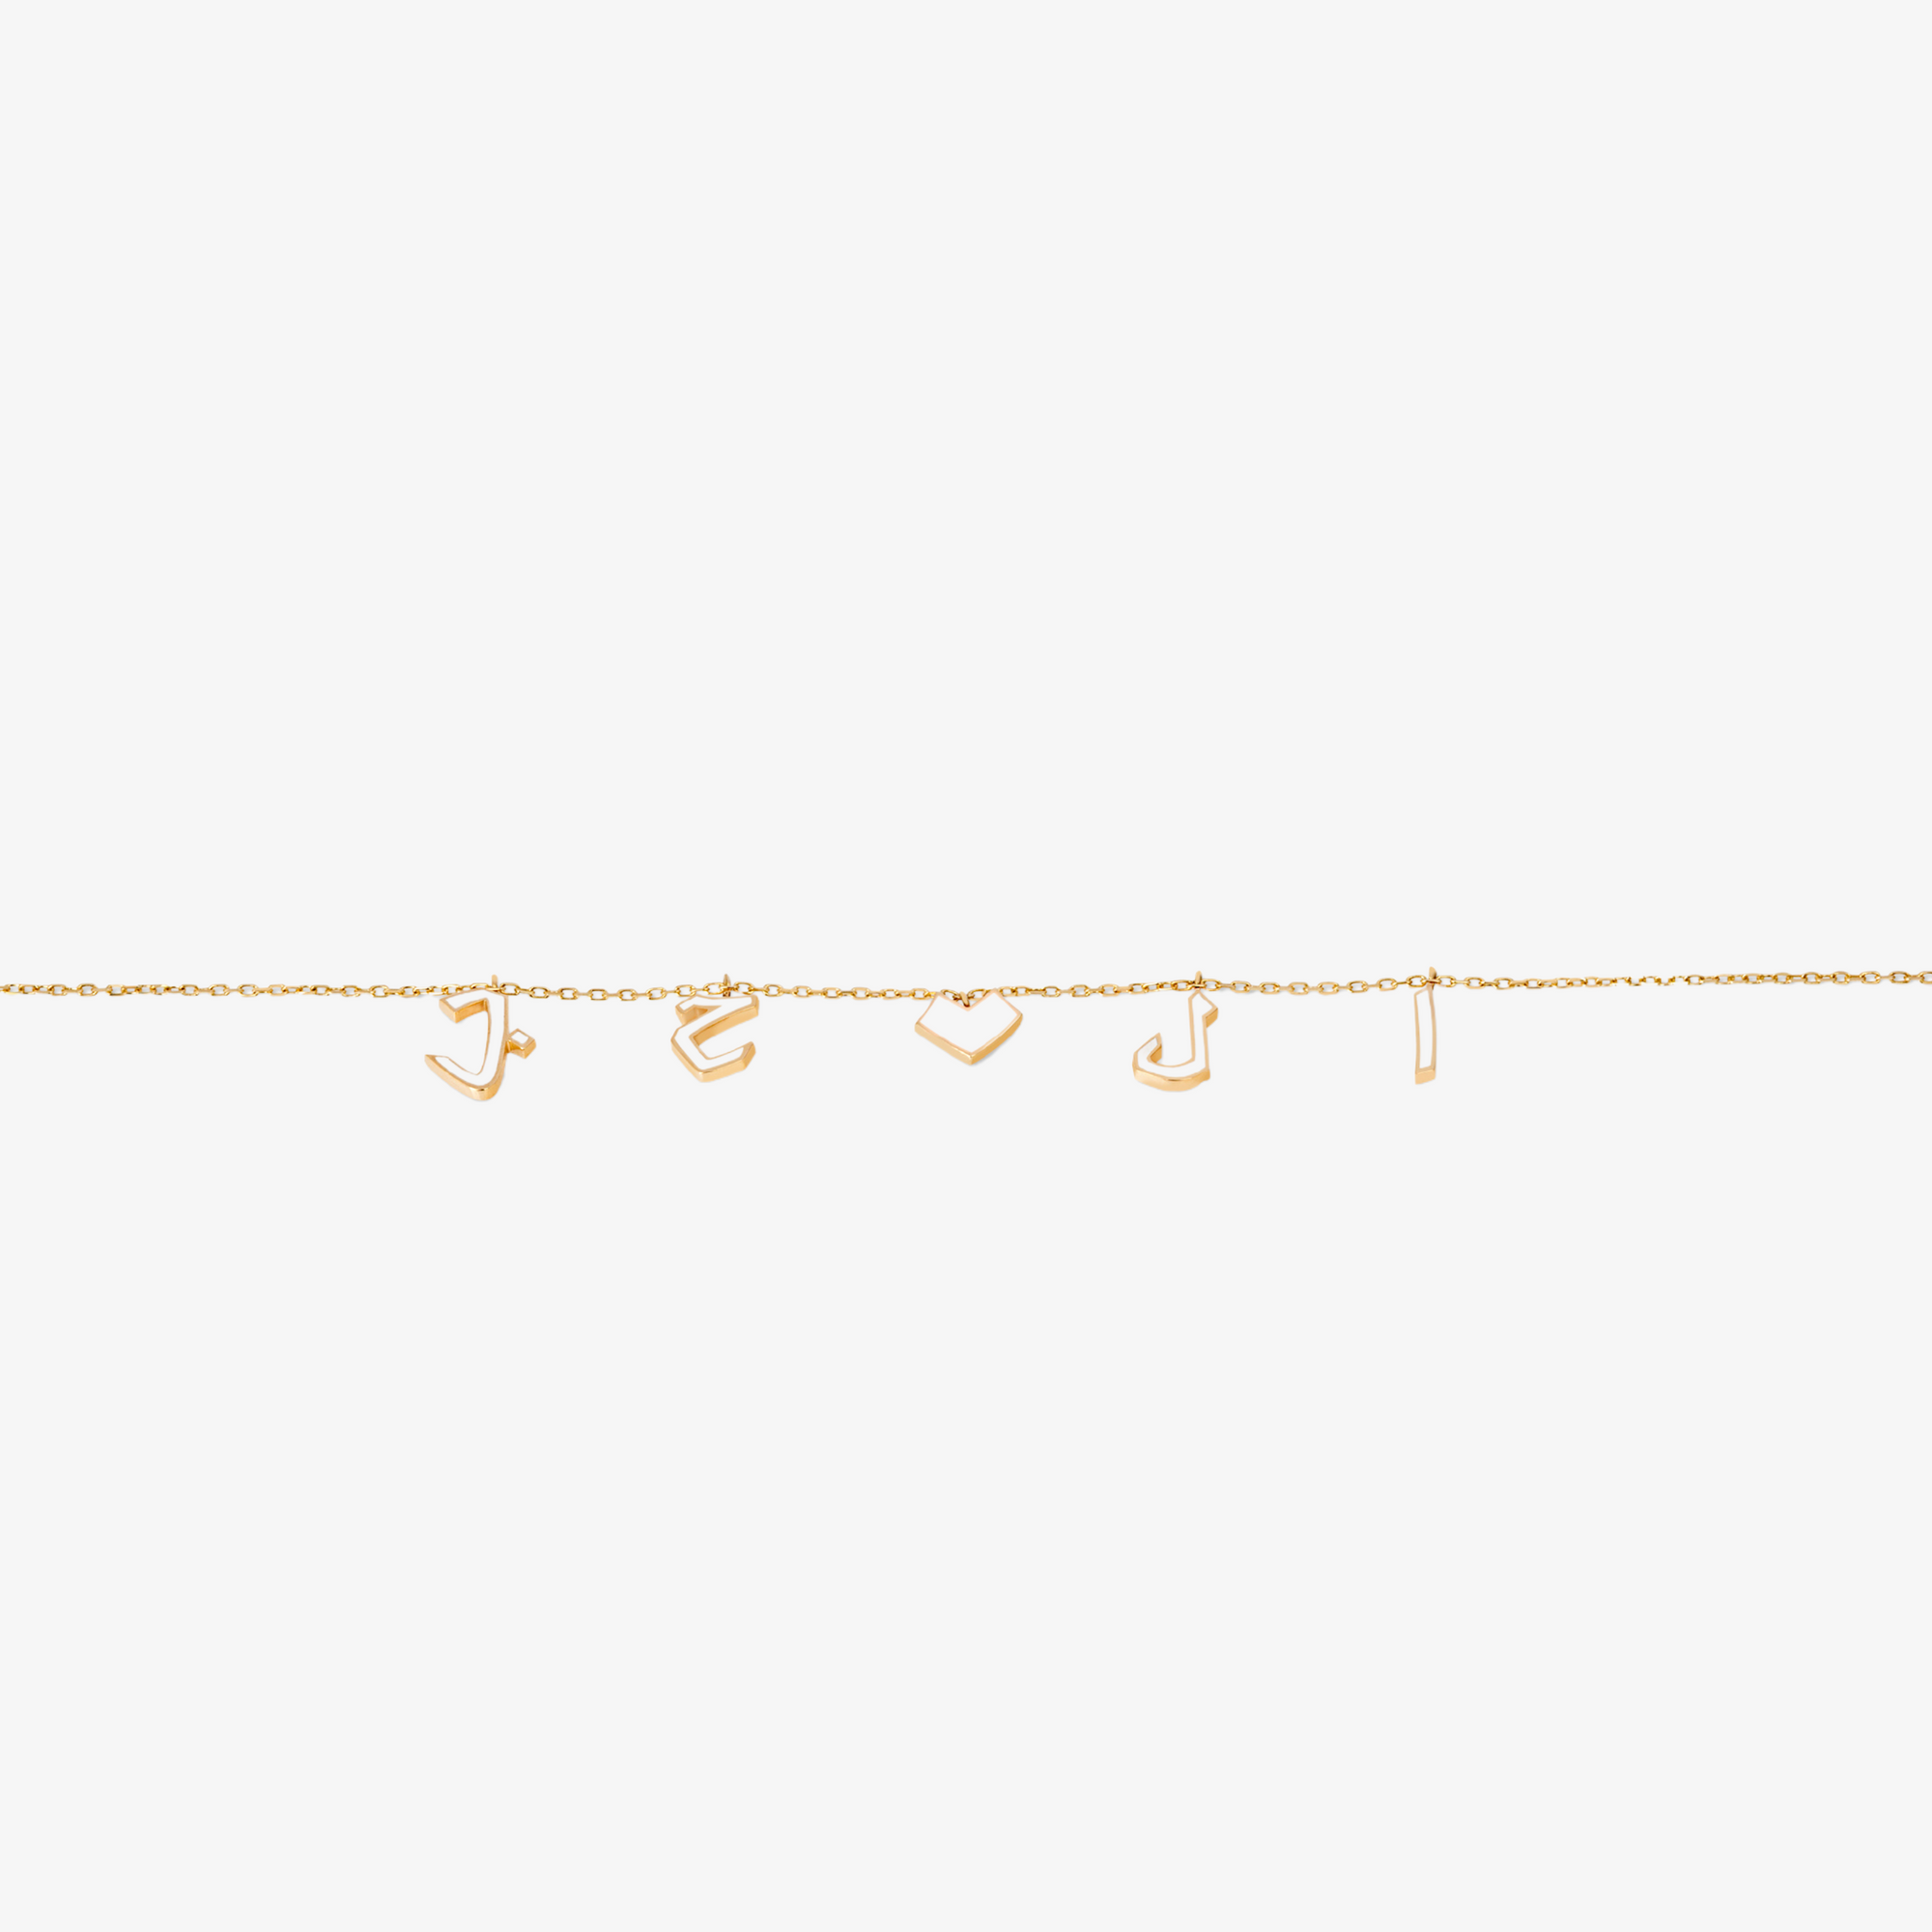 OULA - 18K Gold & Enamel "The Love" Bracelet with Heart Charm